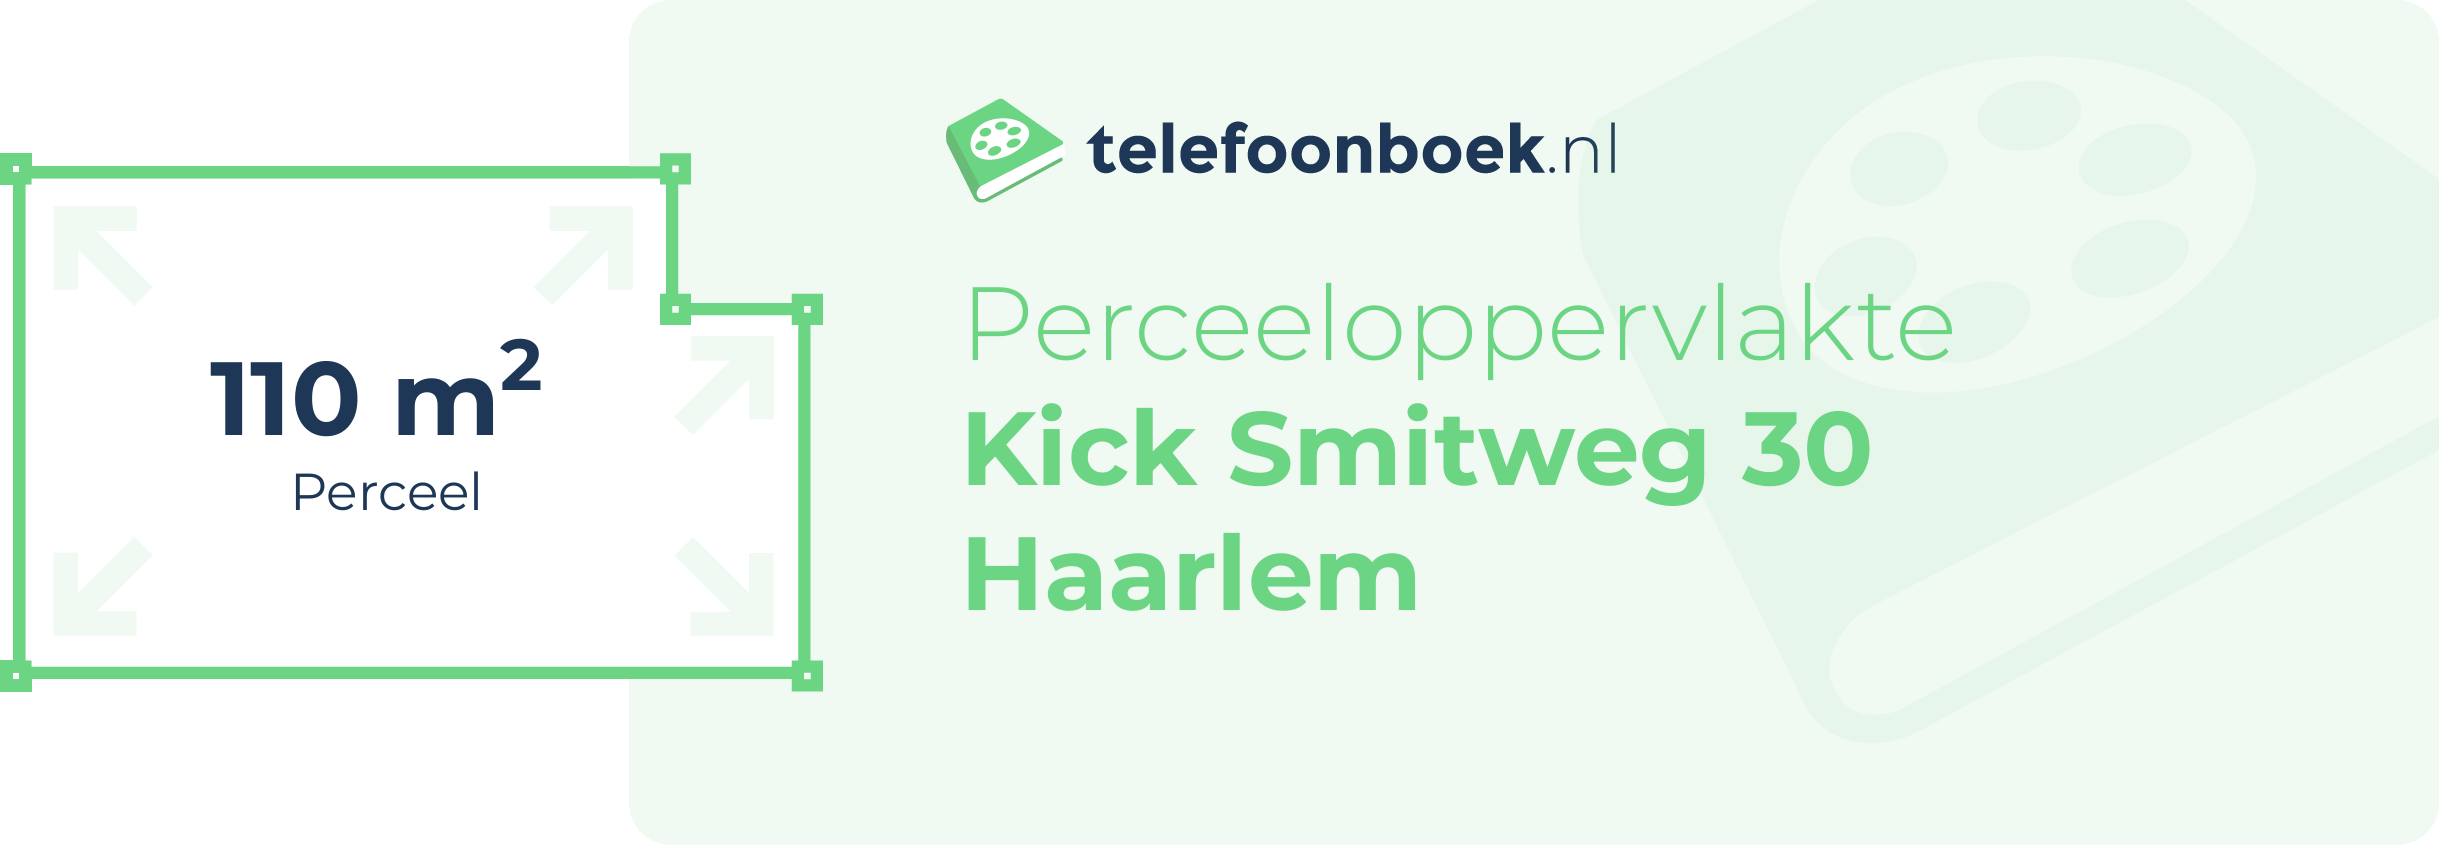 Perceeloppervlakte Kick Smitweg 30 Haarlem